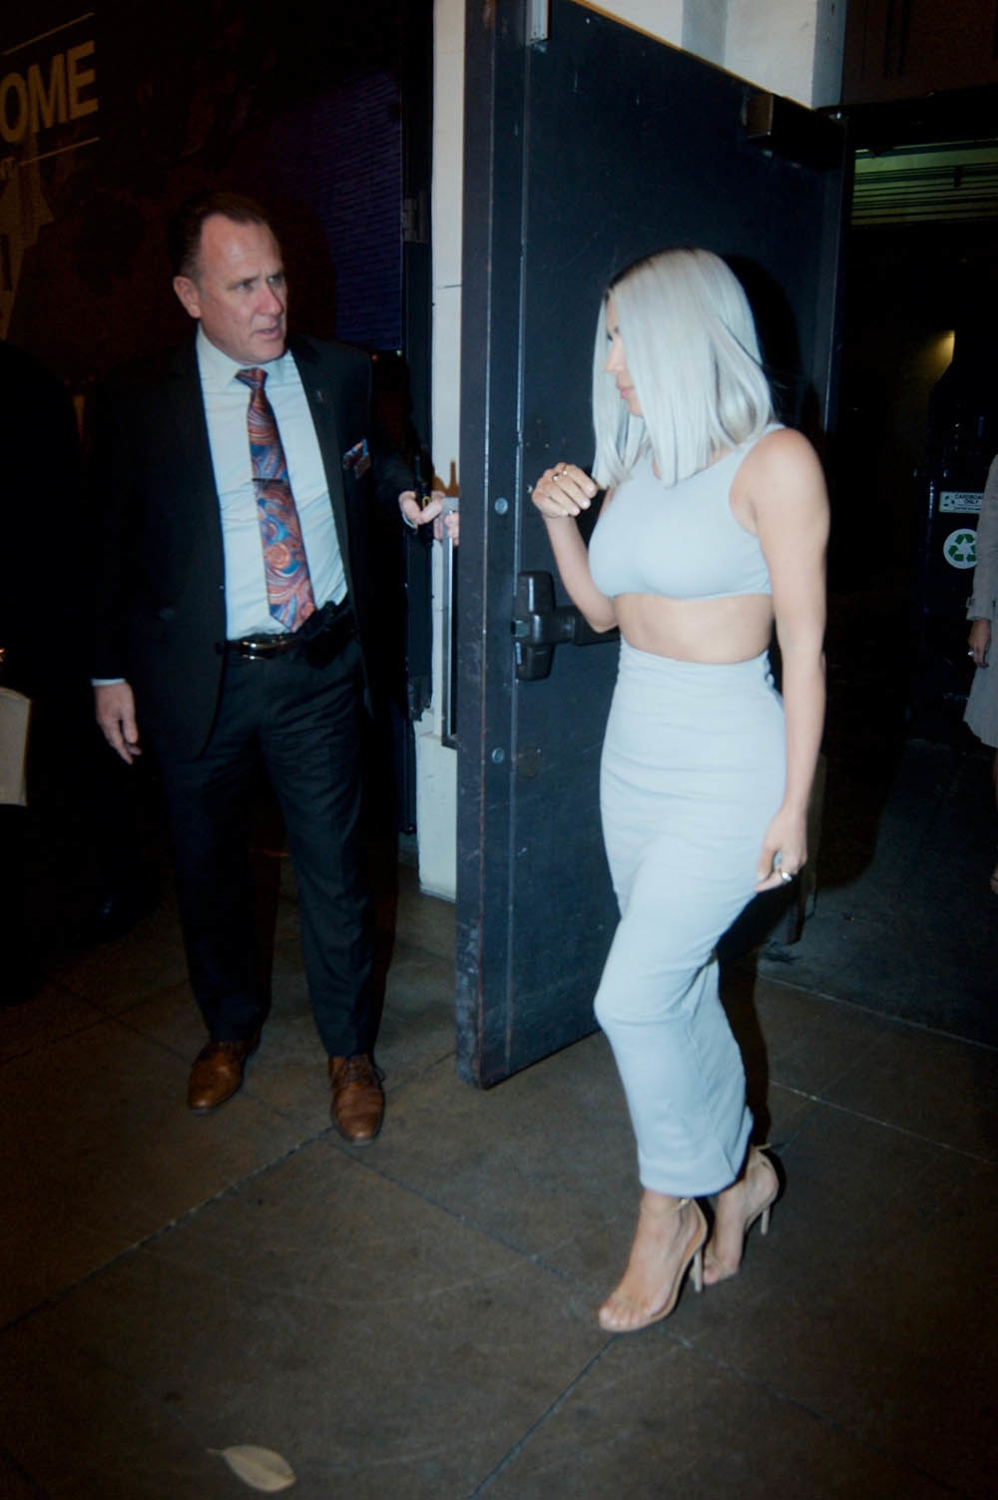 Kim Kardashian leaving an event at The Grove